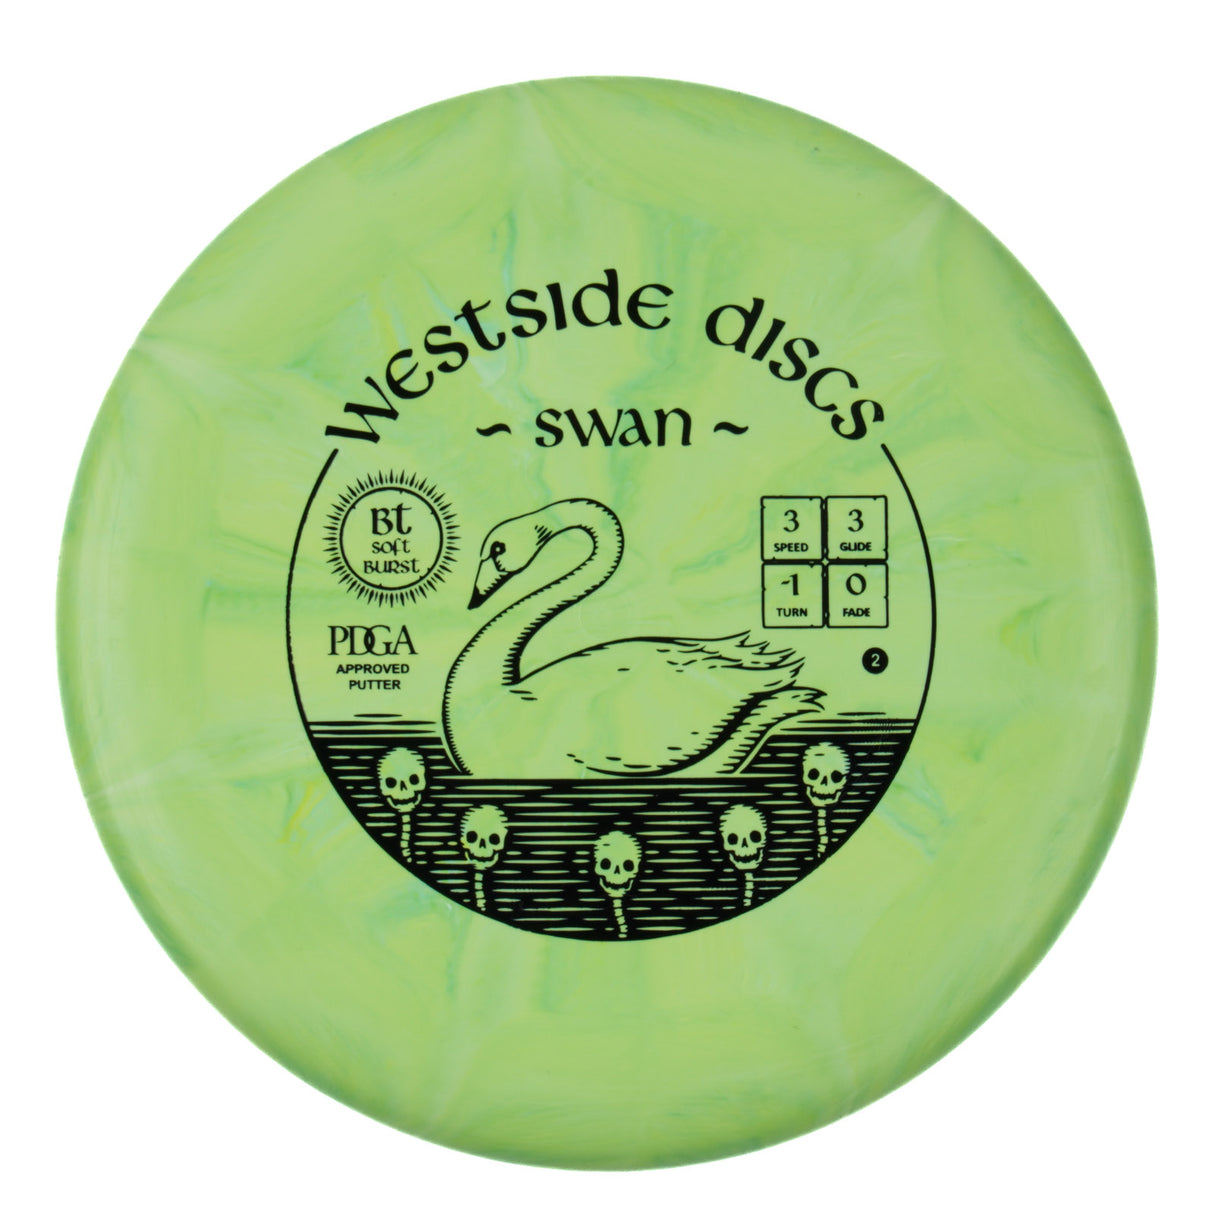 Westside Swan 2 - BT Soft Burst 176g | Style 0002